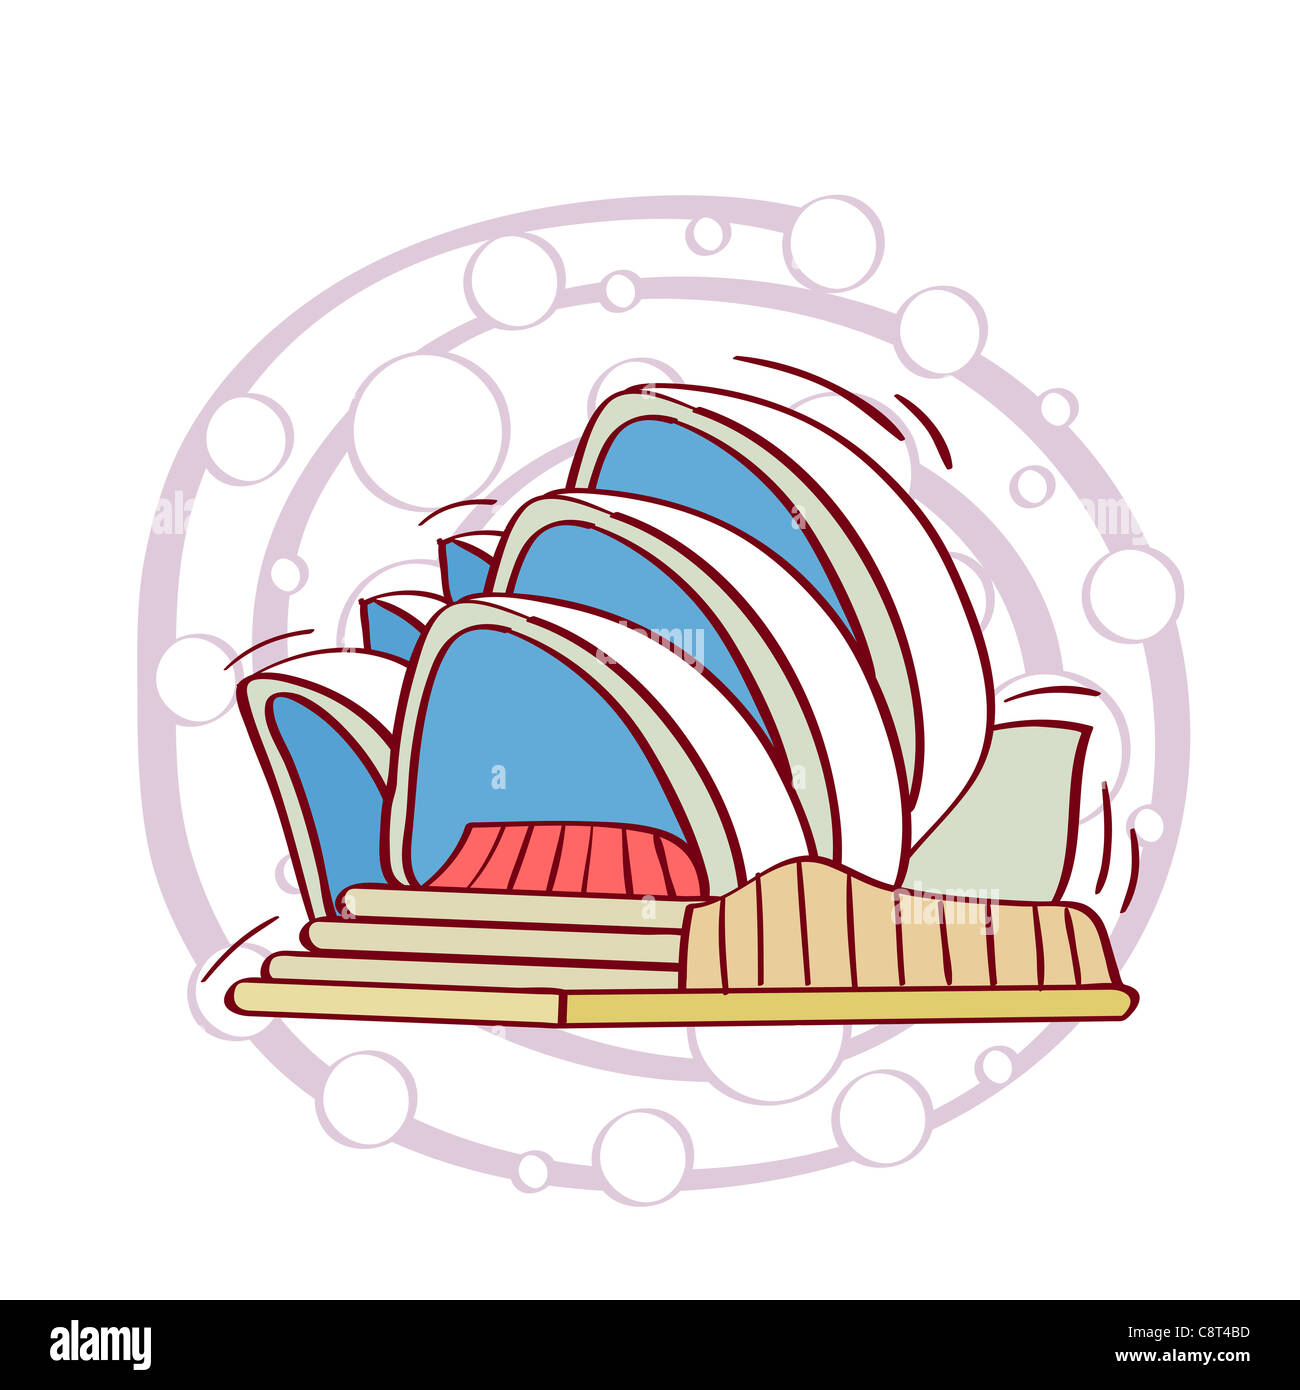 Illustration of Sydney Opera House Stock Photo